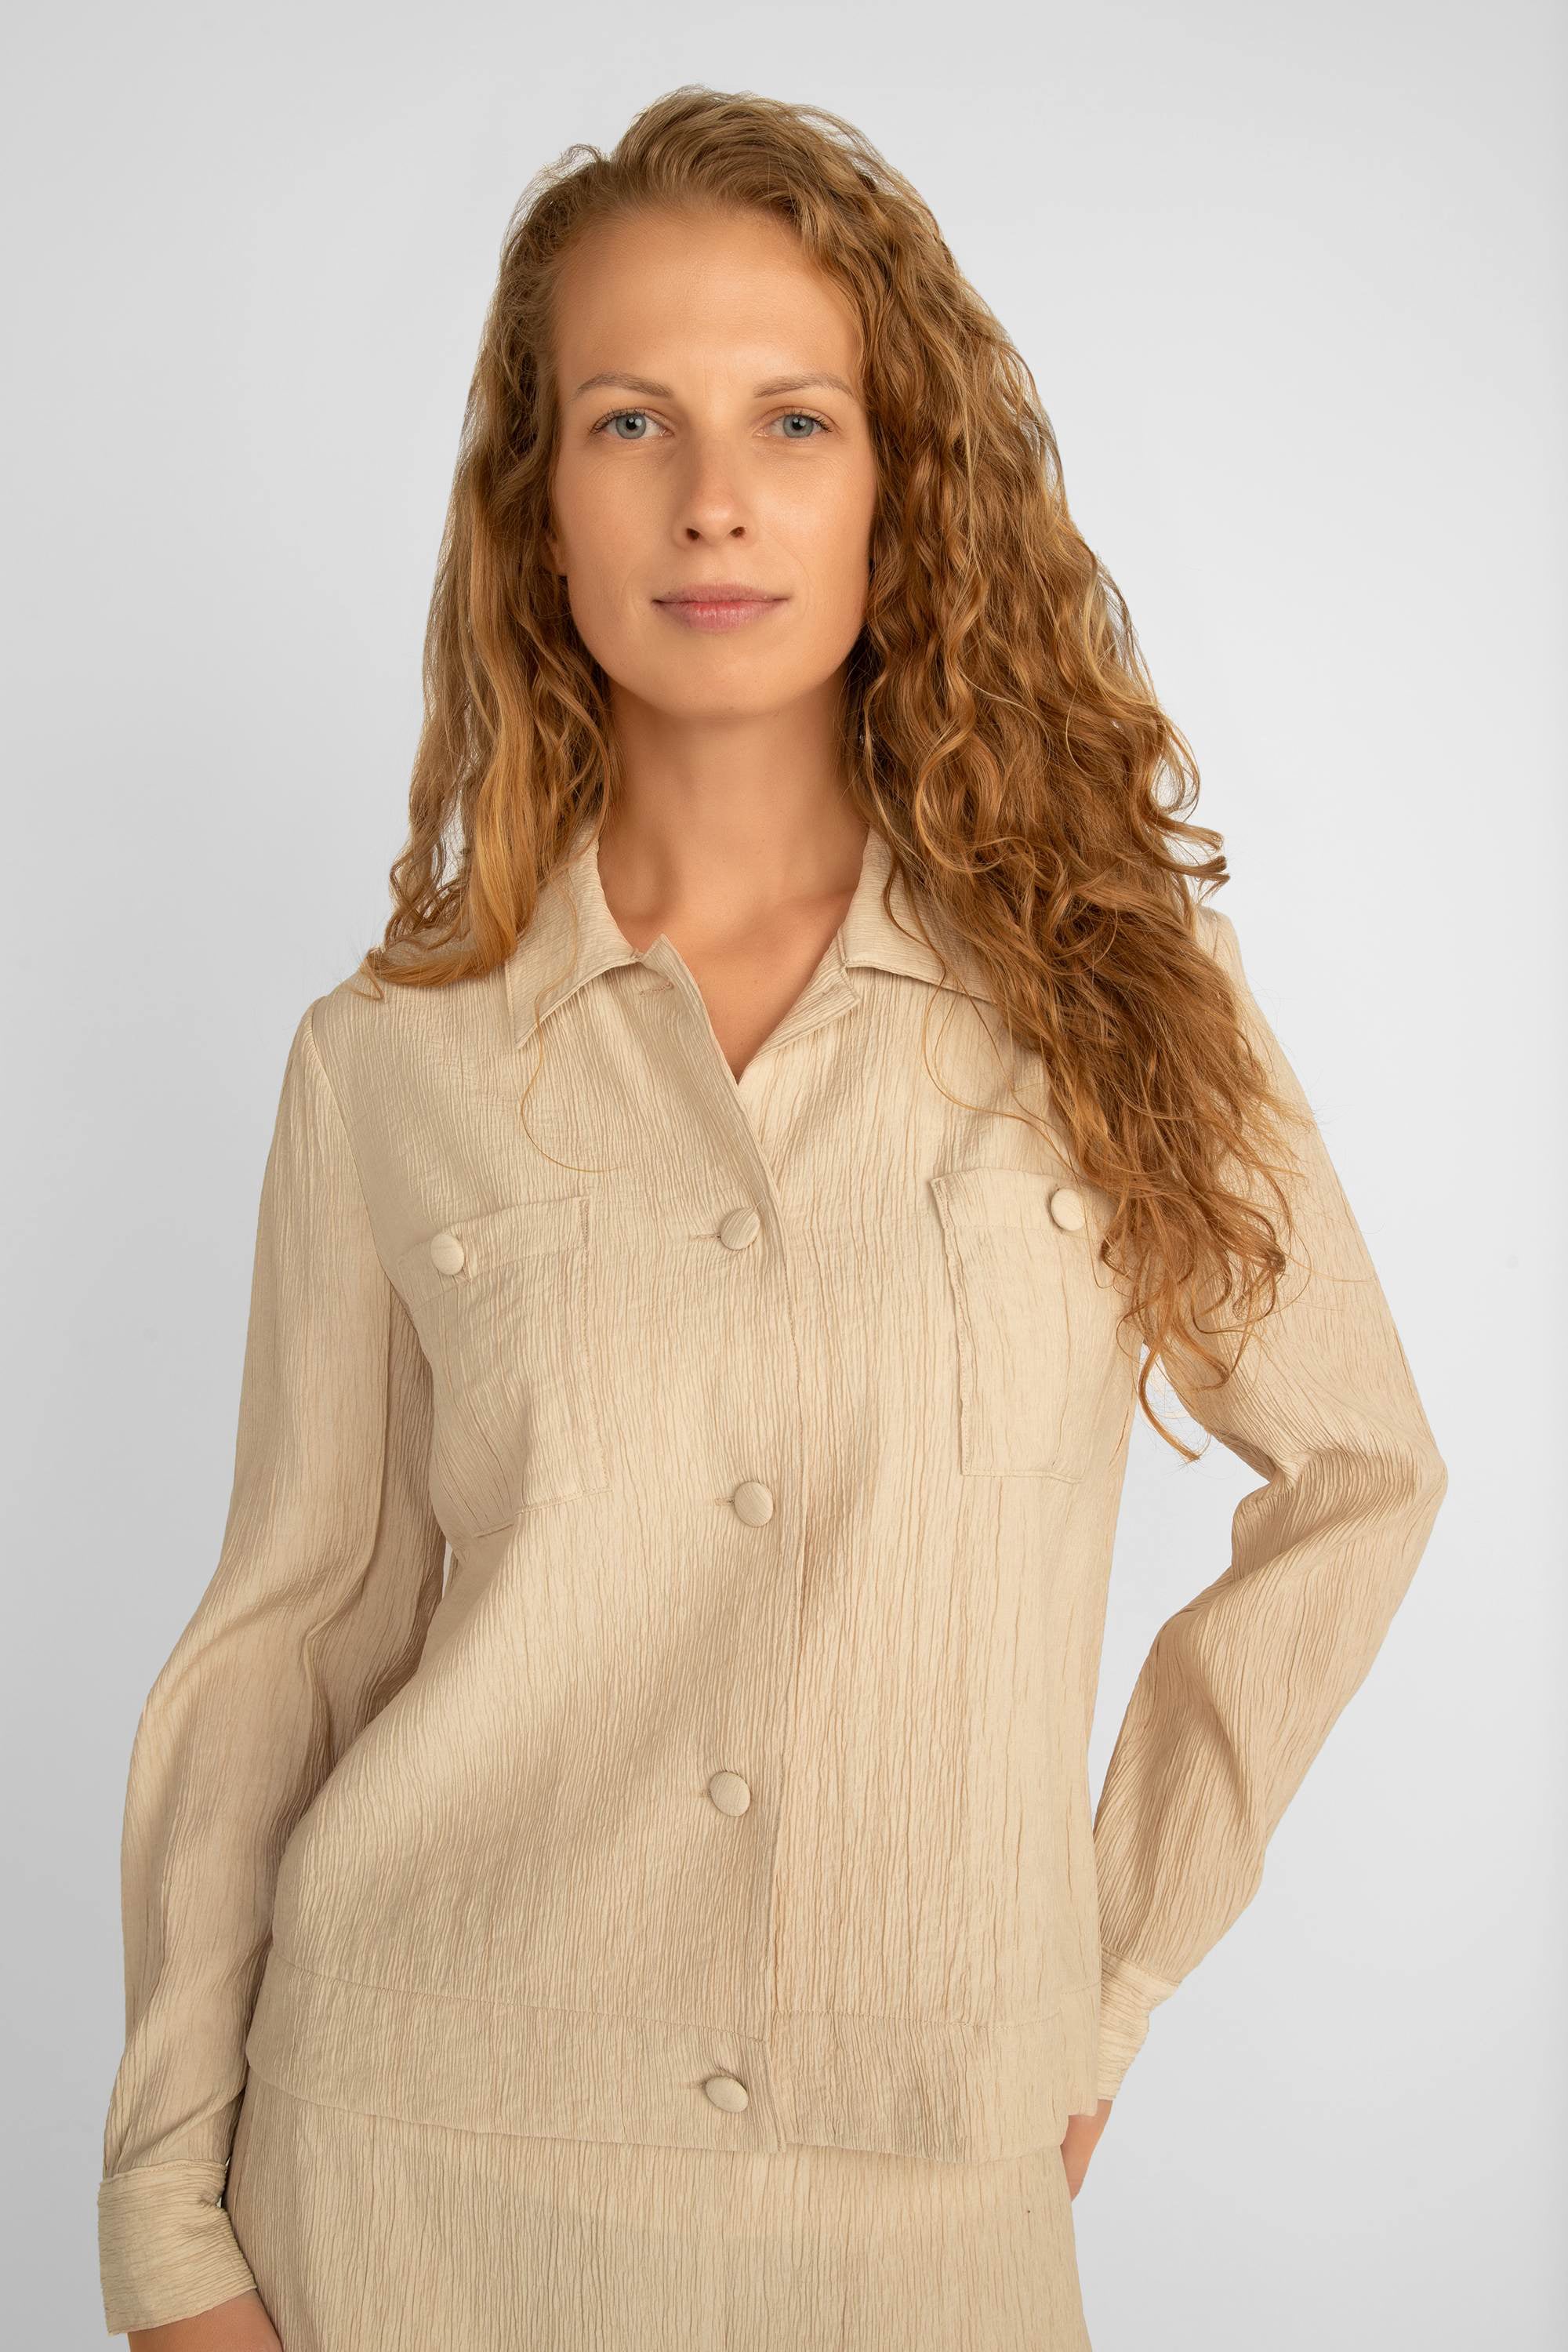 Picadilly (JM581) Women's Long Sleeve Button Front Textured Viscose Jacket in Milk Tea Beige